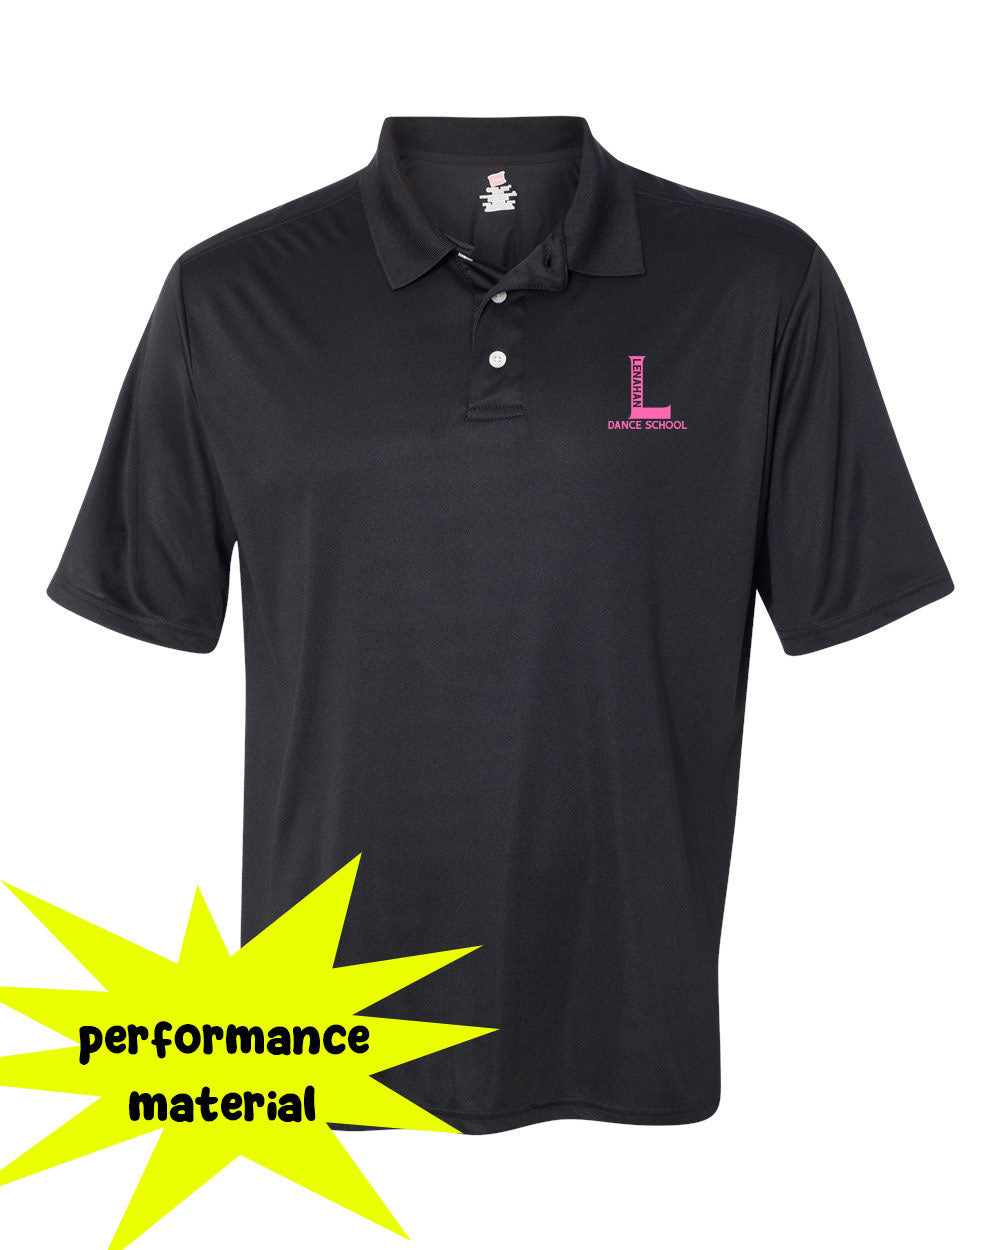 Lenahan Dance Design 1 Performance Material Polo T-Shirt